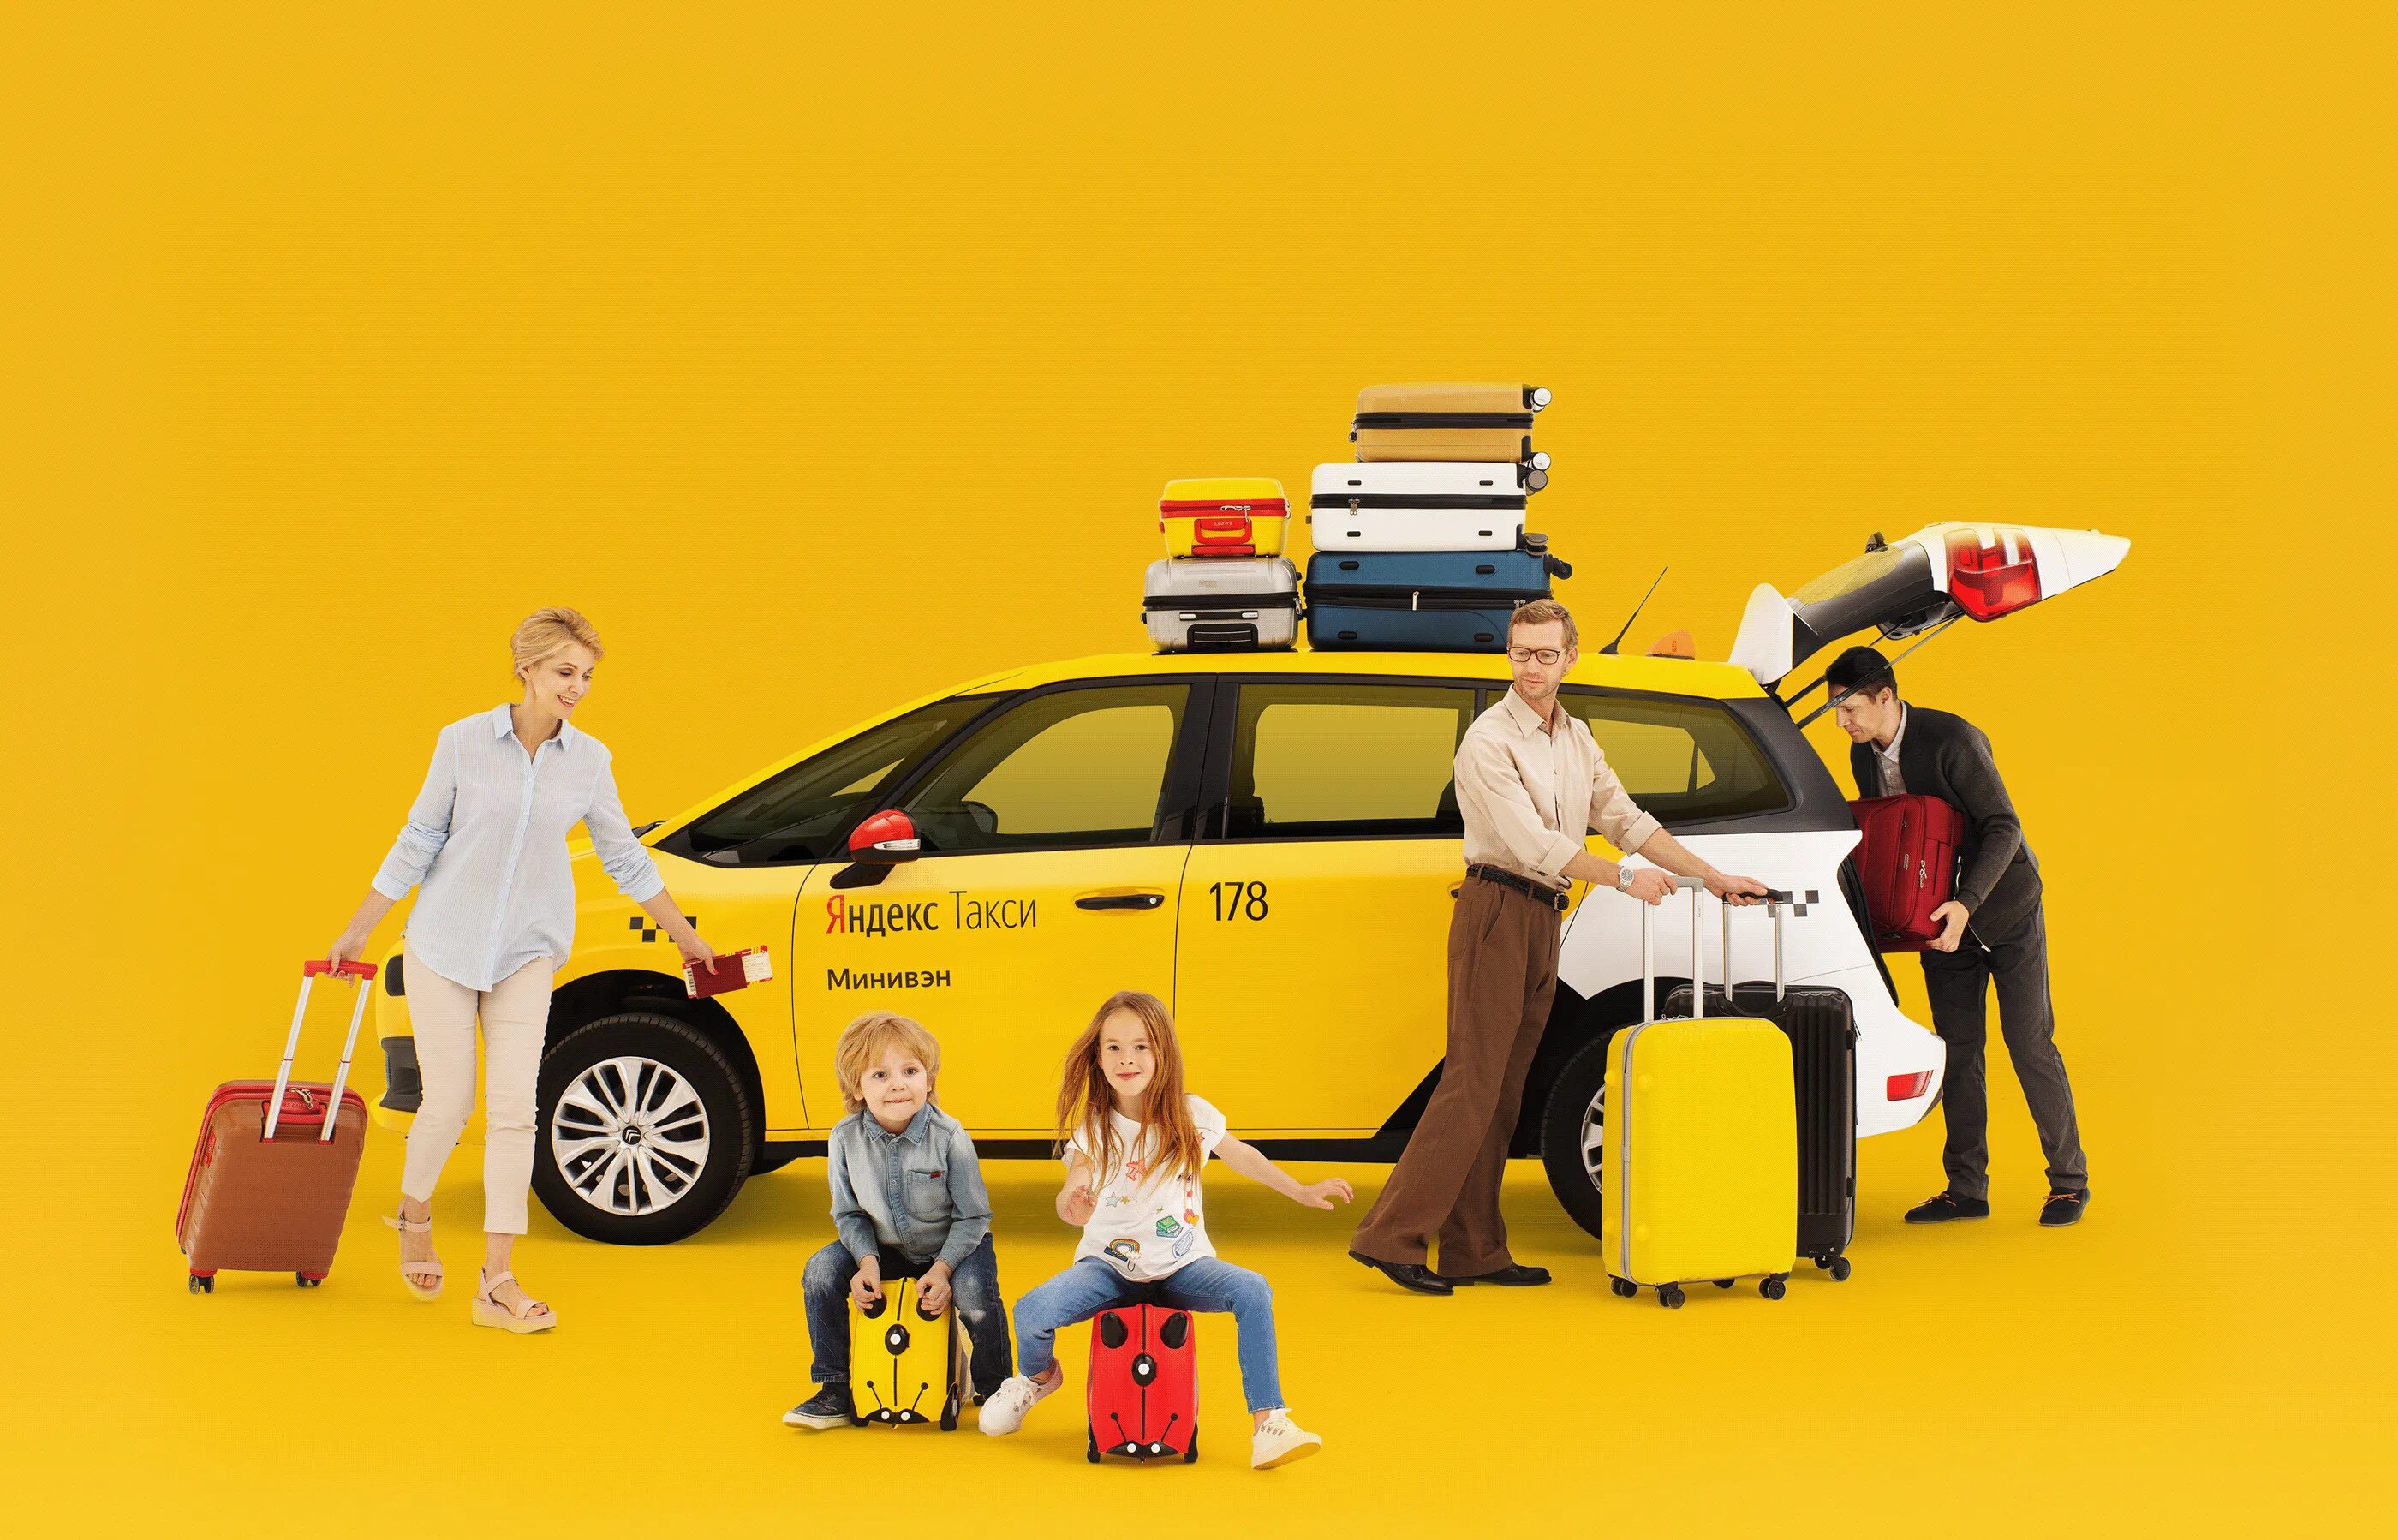 Вызвать такси гоу. Реклама такси. Креативная реклама такси. Такси картинки.